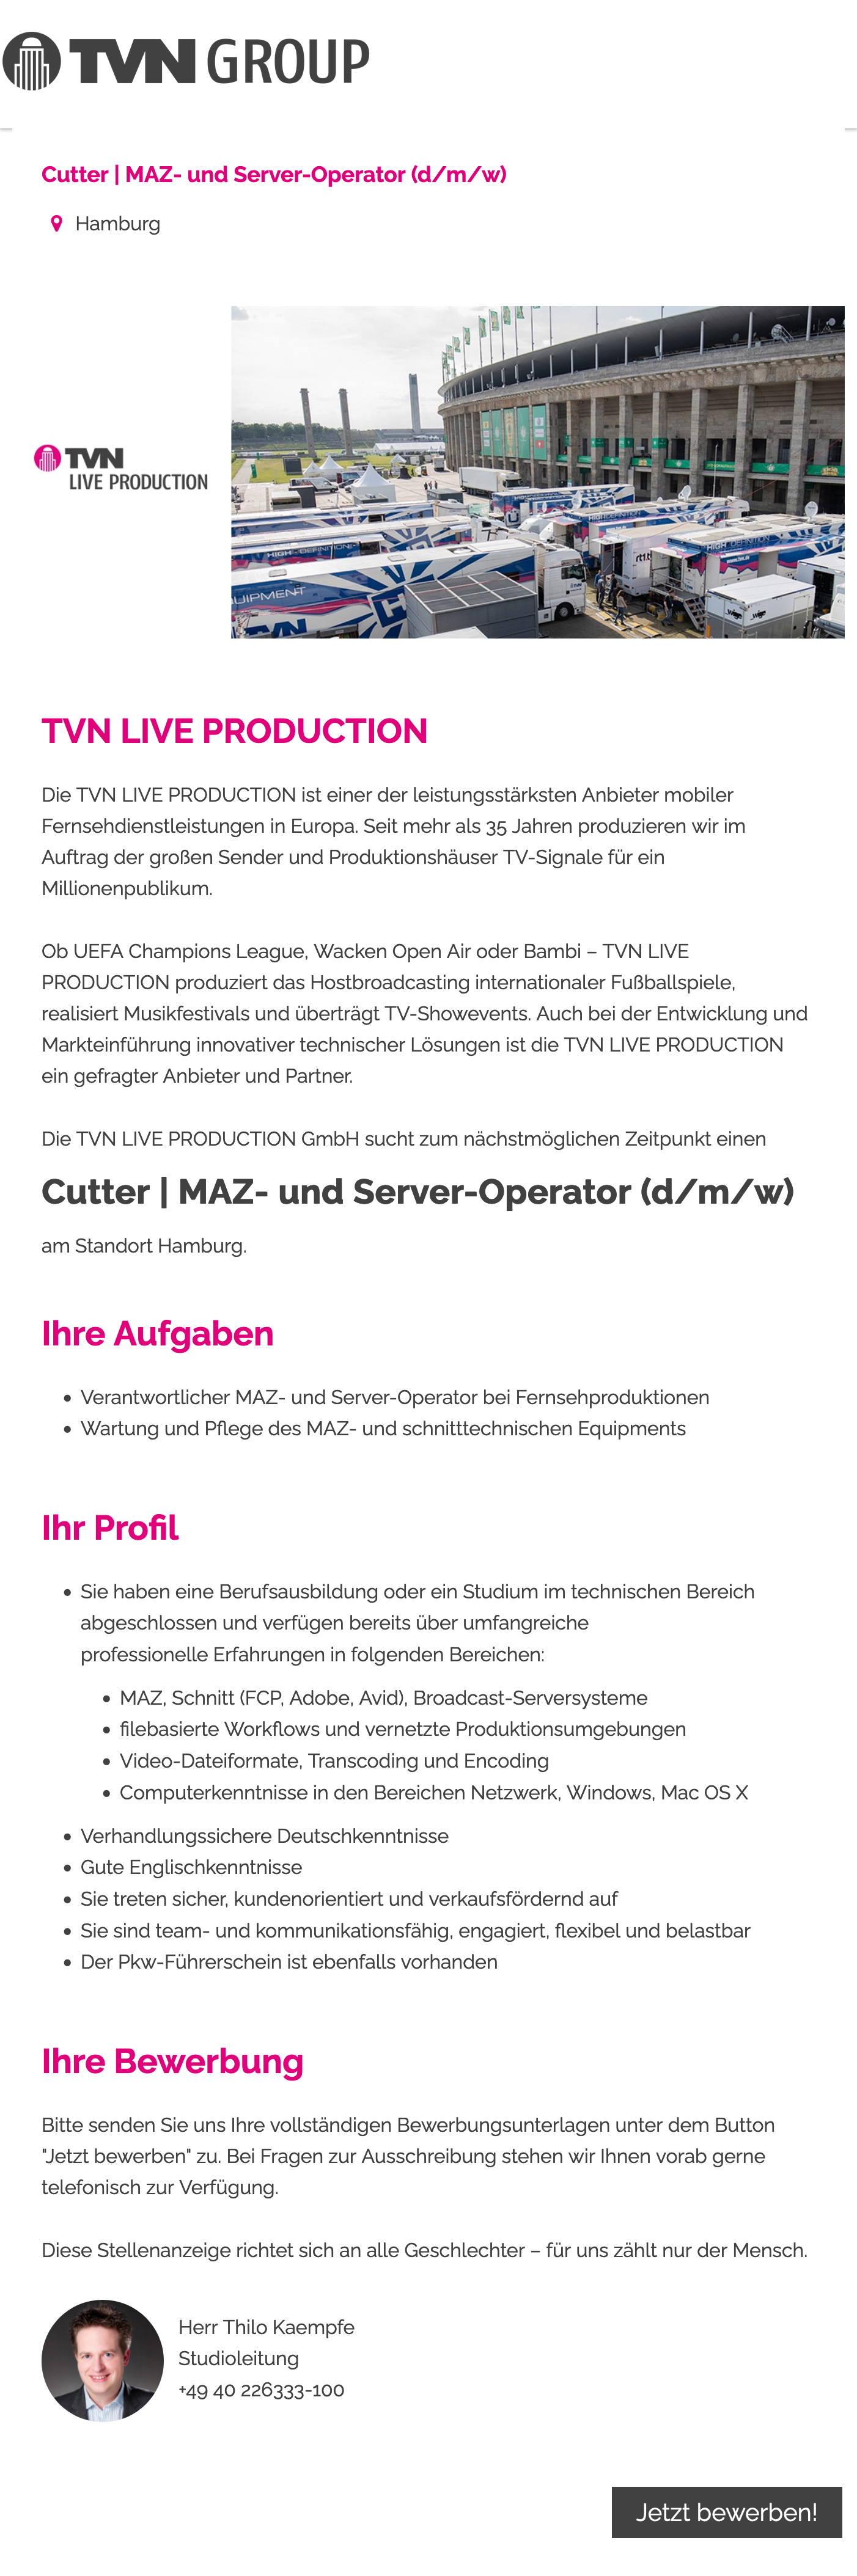 Cutter / MAZ- und Server-Operator (d/m/w)